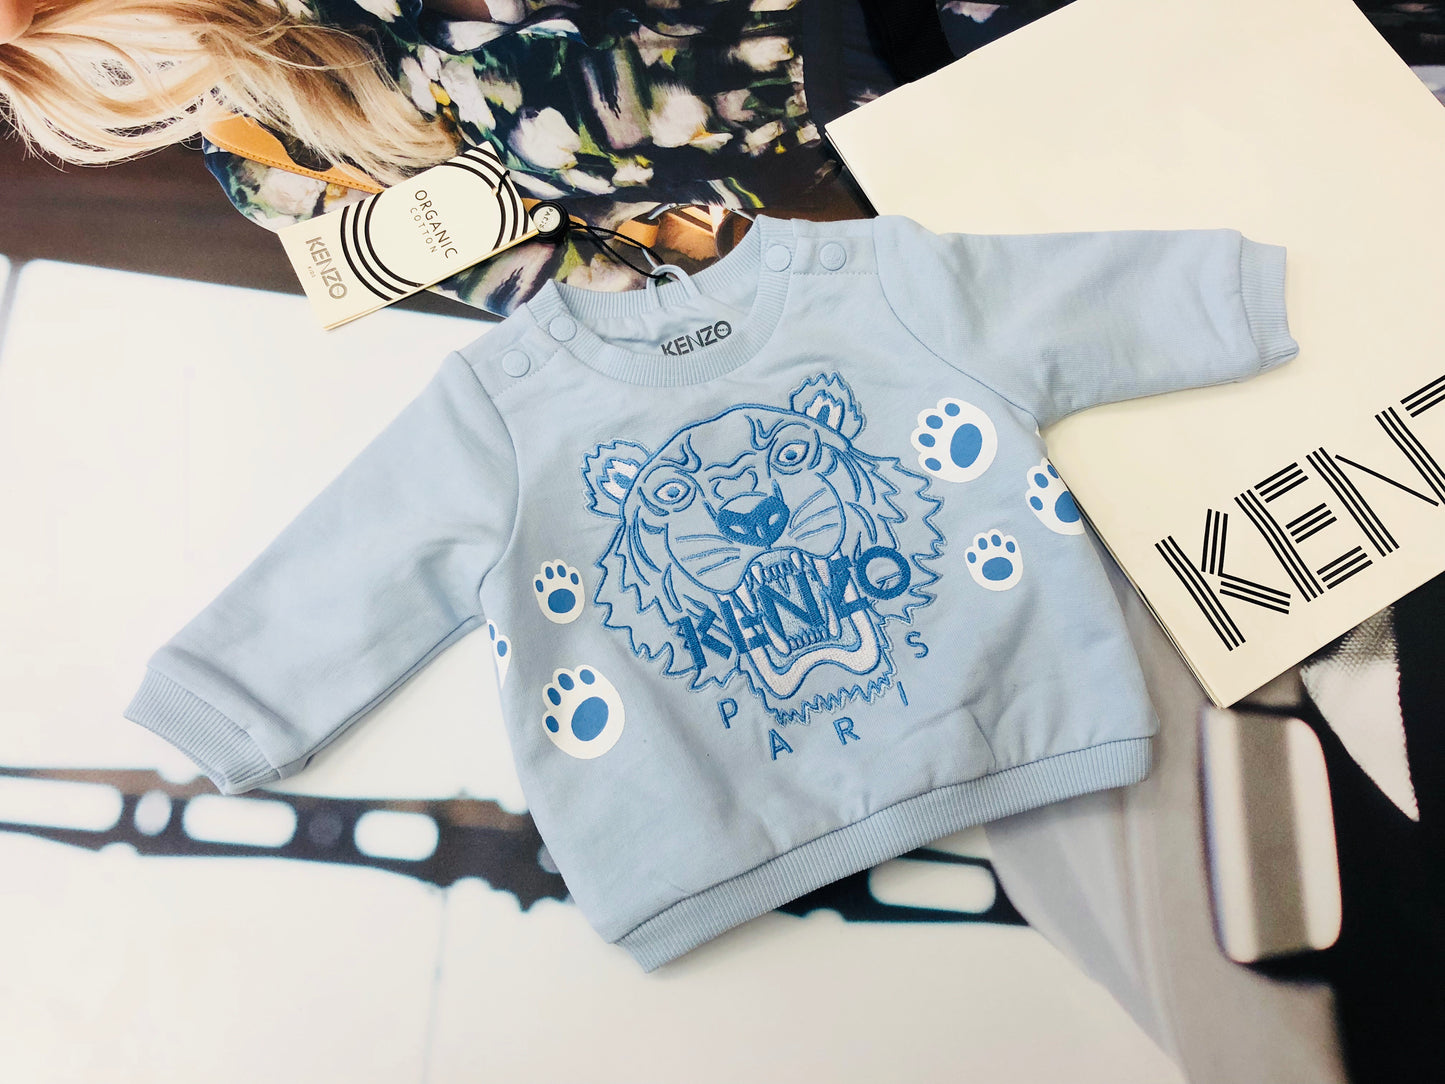 Kenzo Kids tiger embroidered sweatshirt